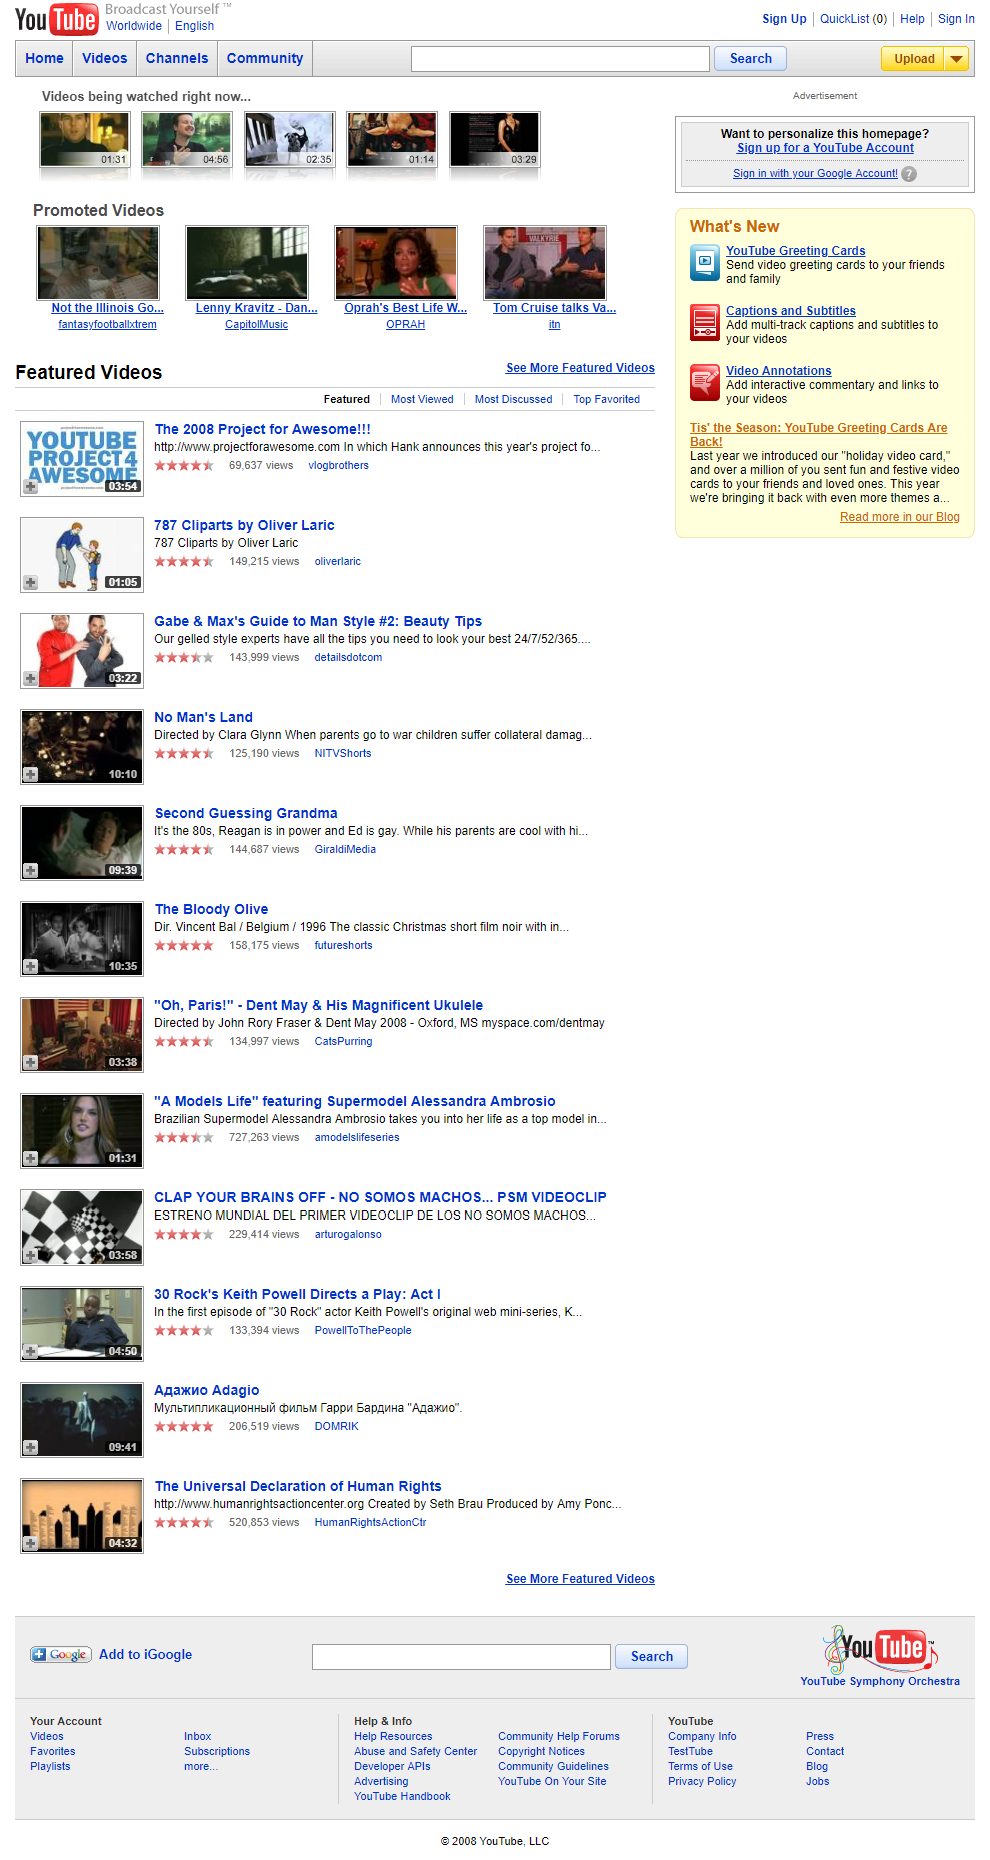 YouTube website in 2008